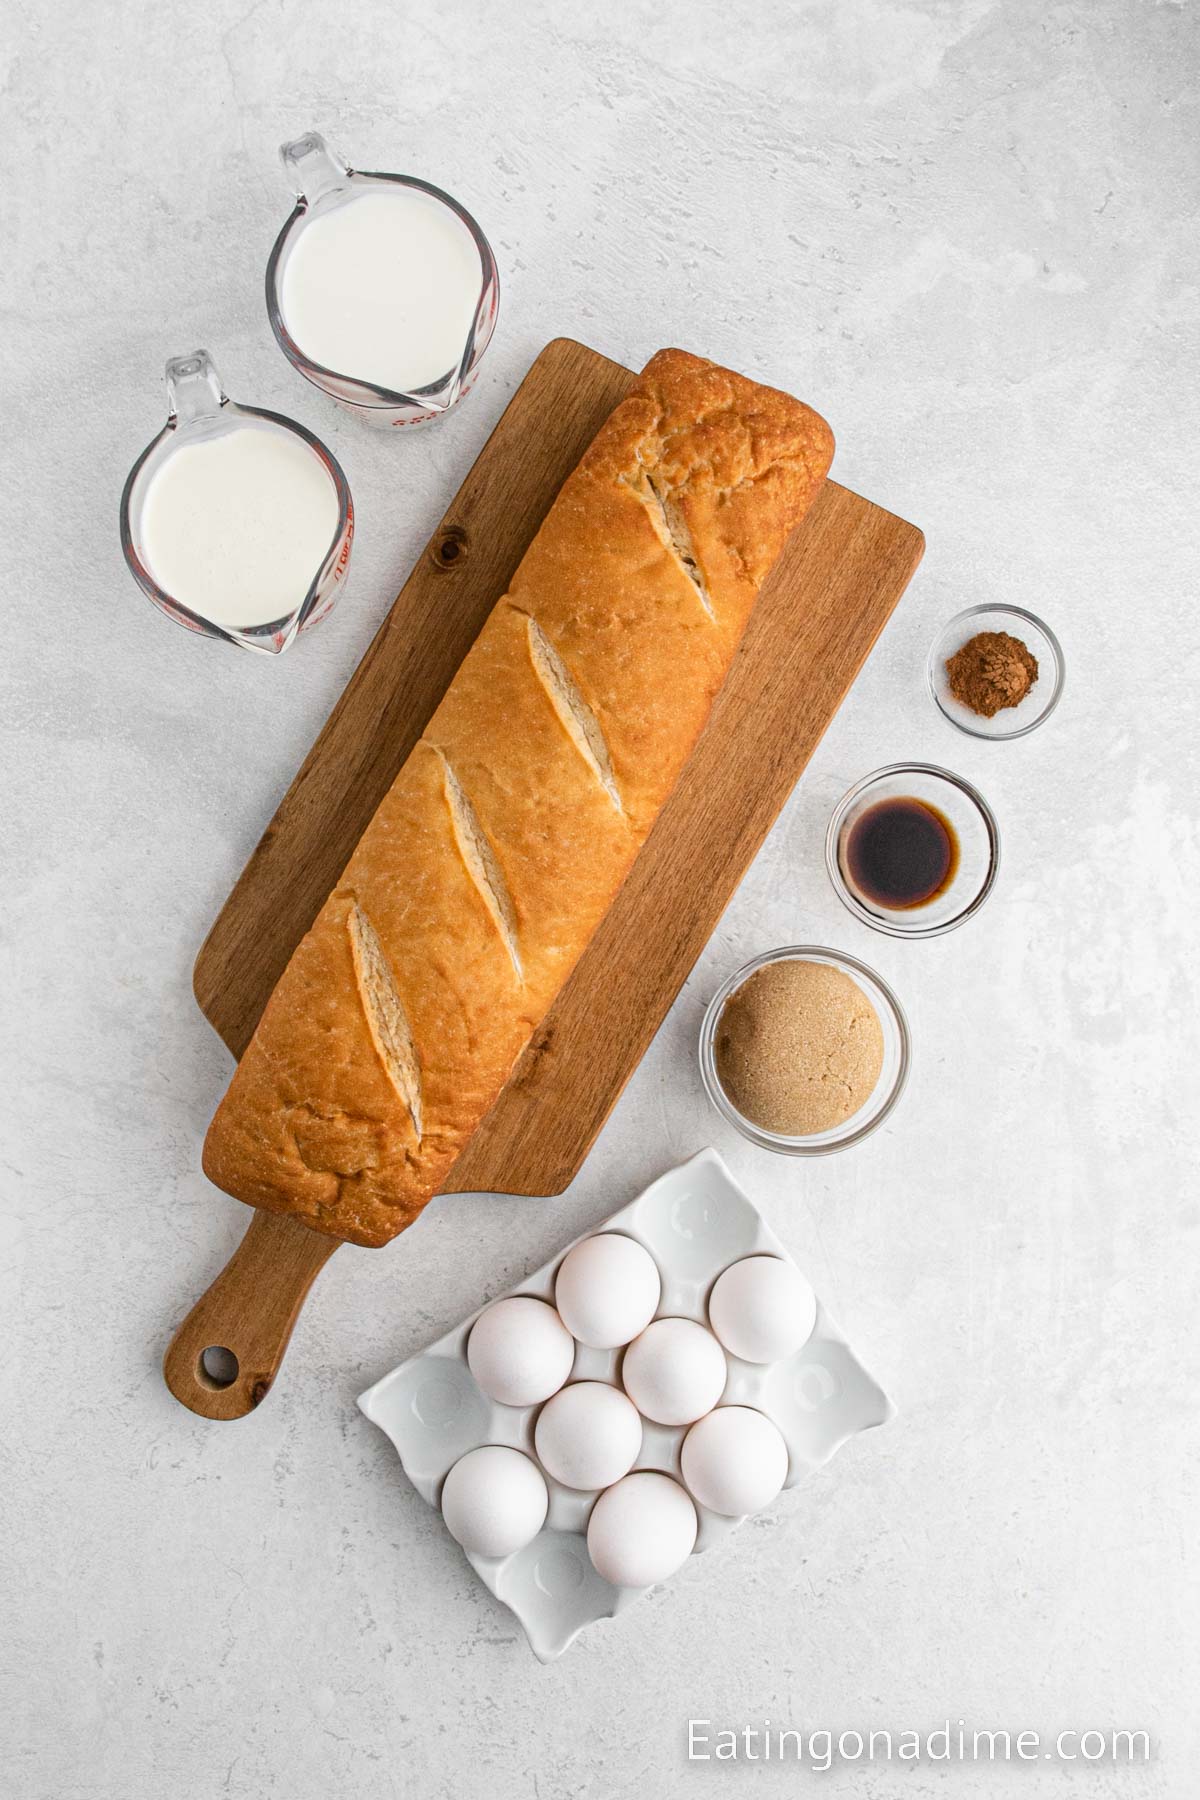 Ingredients needed for French Toast - Bread, eggs, heavy cream, milk, brown sugar, vanilla extract, cinnamon